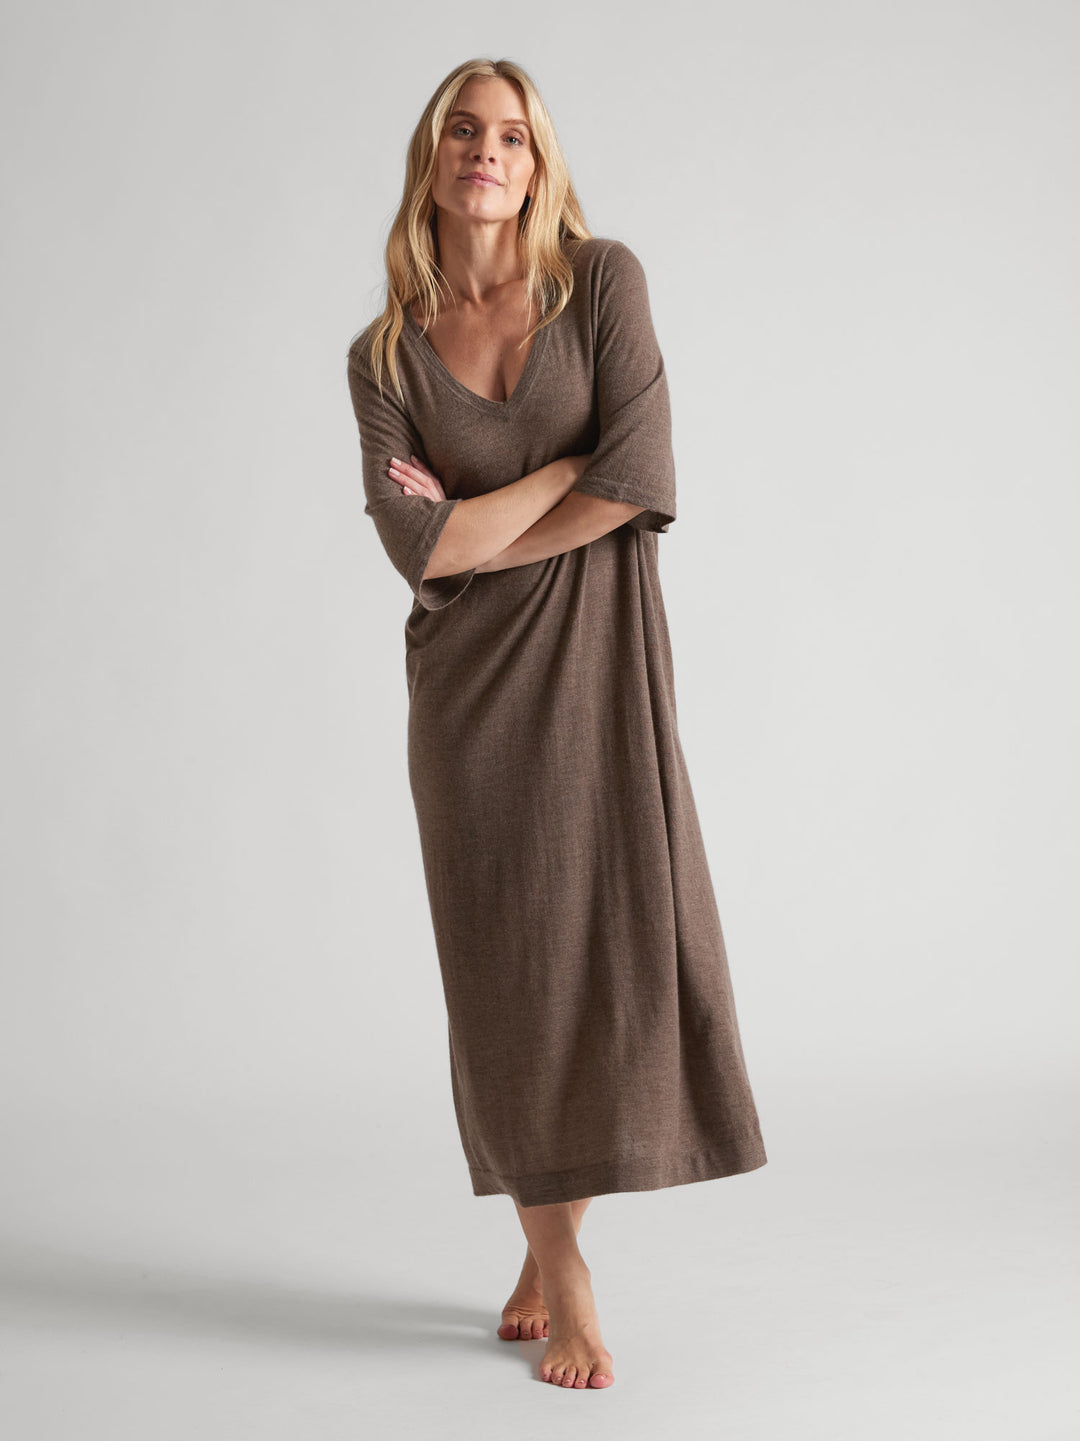 Long, light, thin, cashmere dress "June" in 100% pure cashmere. Color: Dark Toast. Scandinavian design by Kashmina.